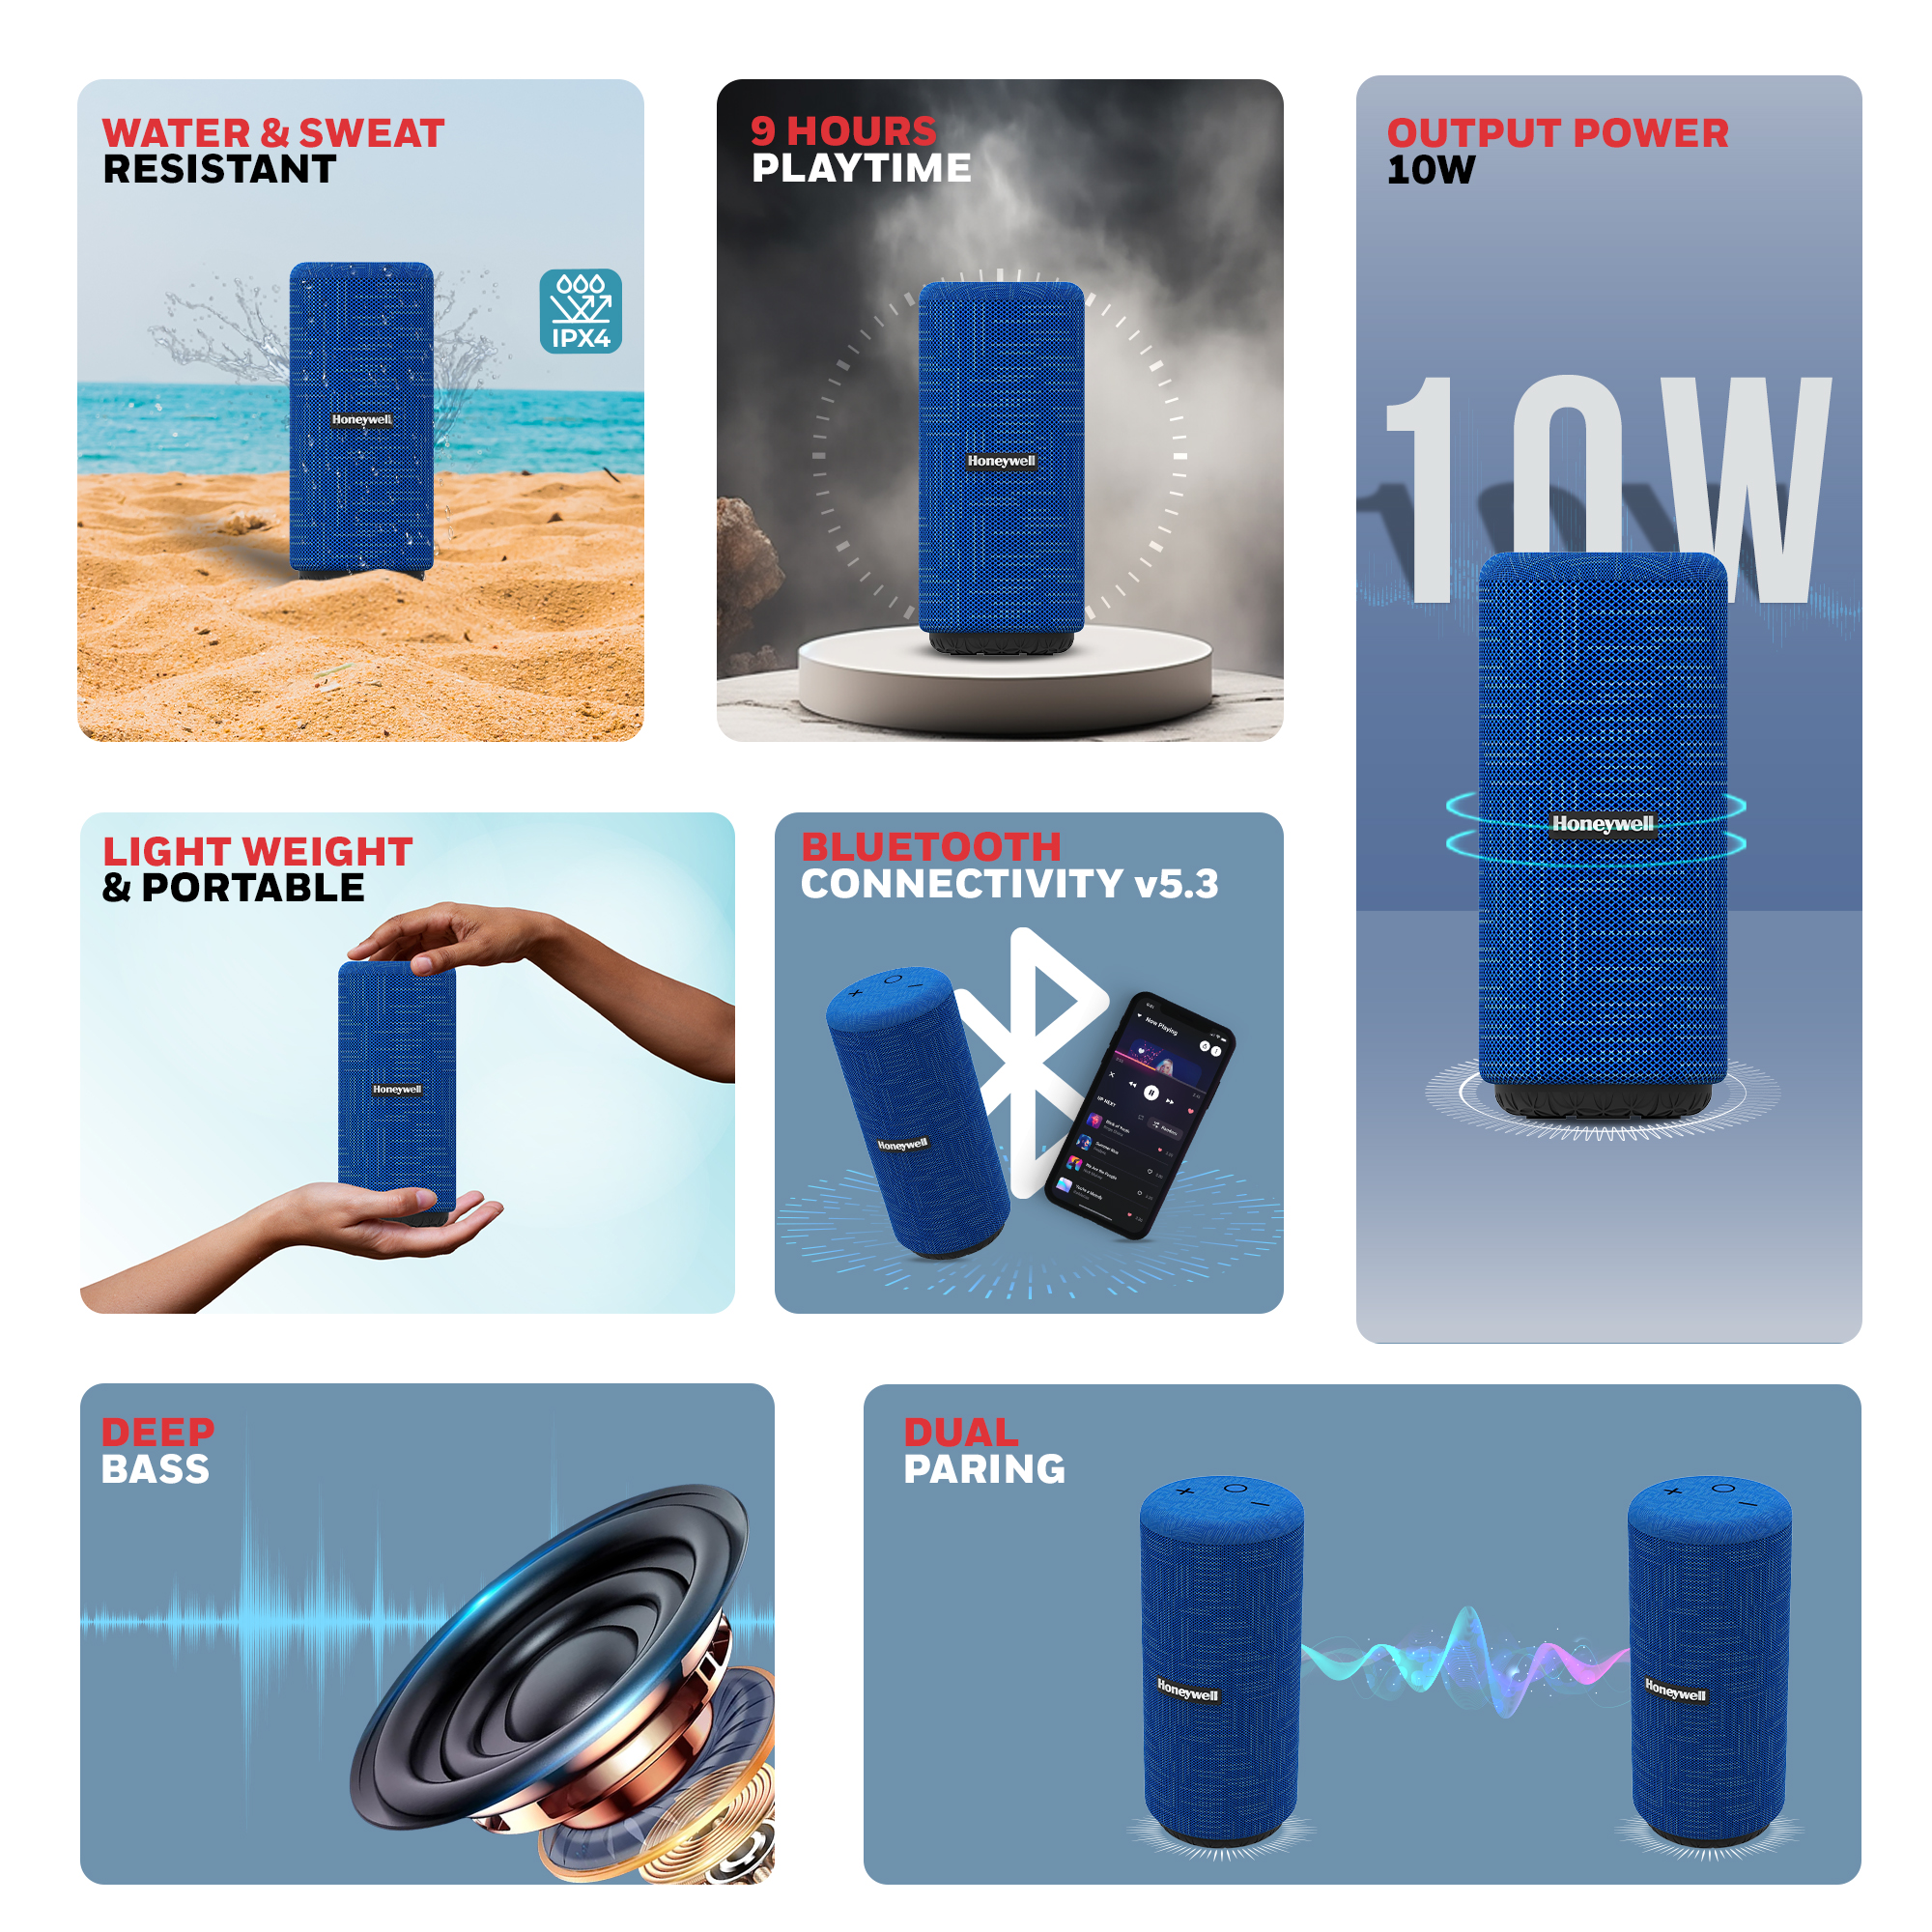 Honeywell Newly Launched Suono P300, Wireless Bluetooth Speaker, 10W - Blue